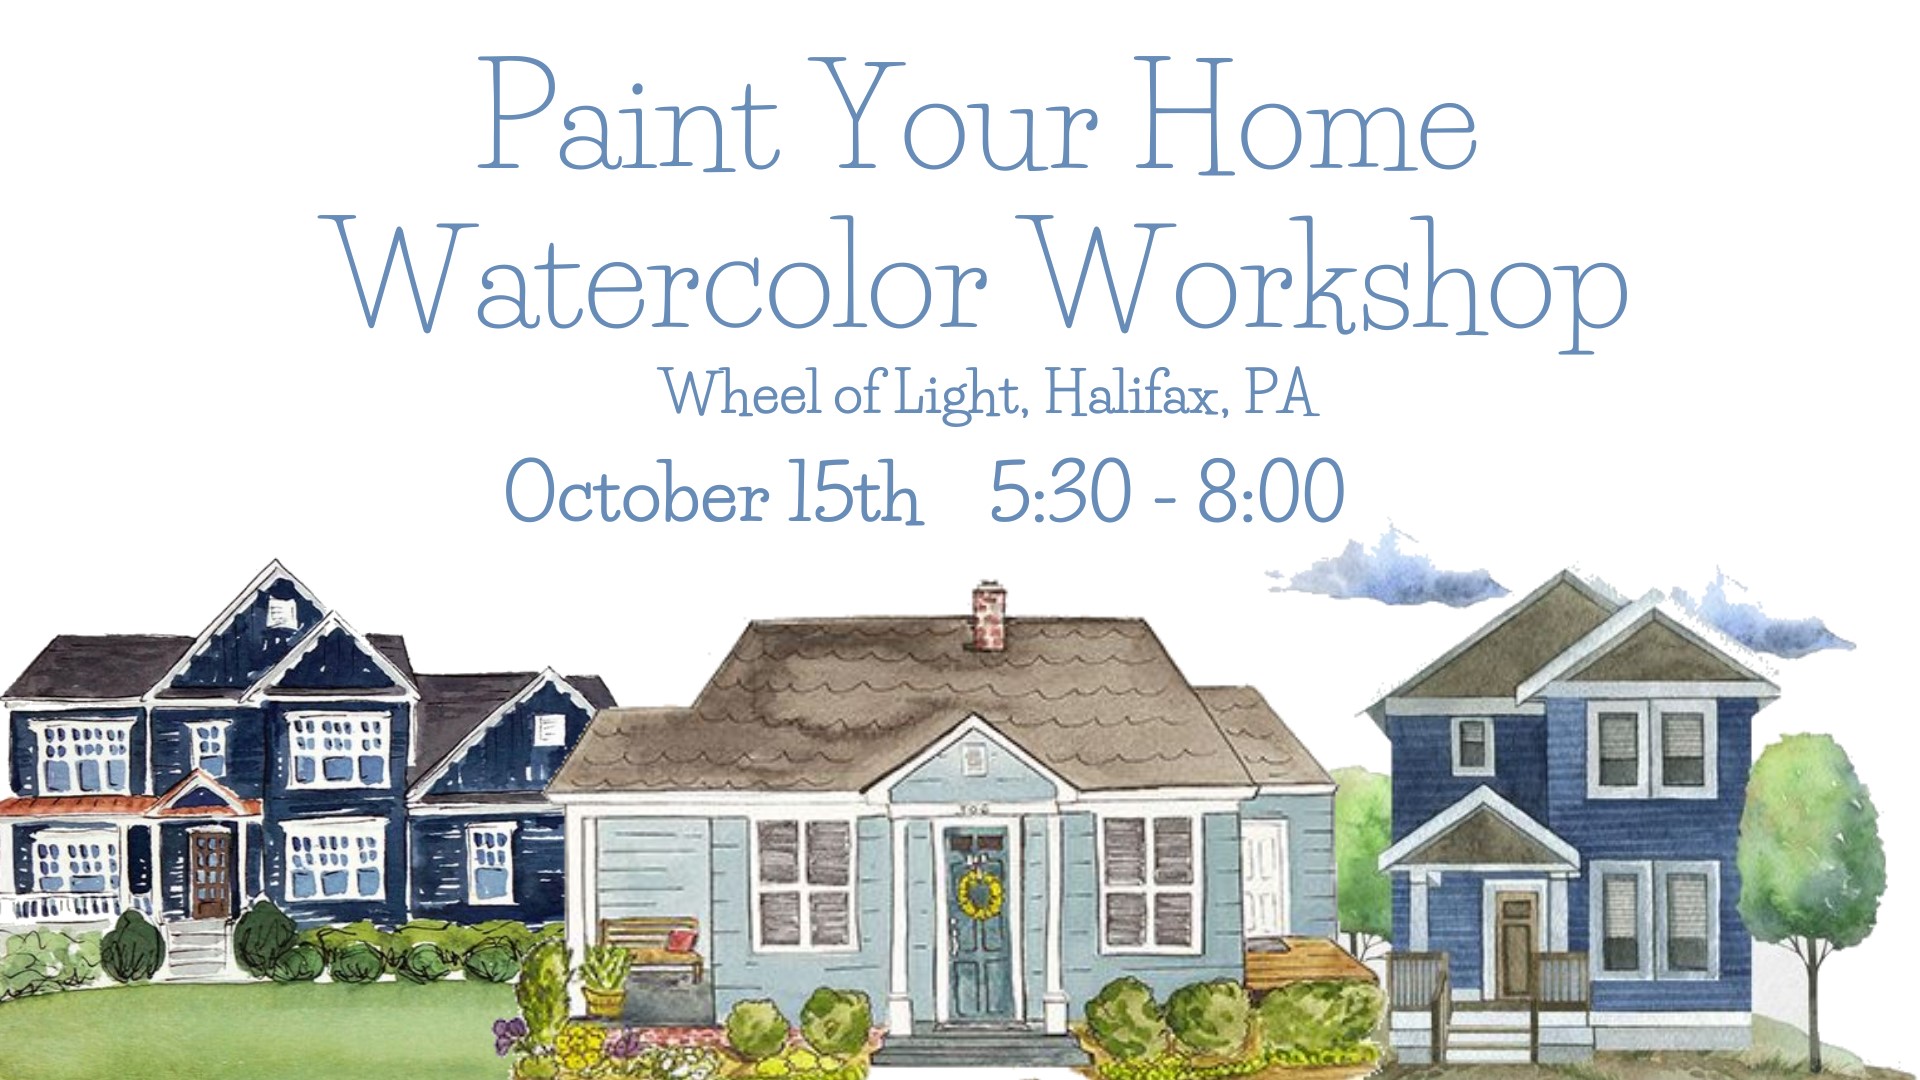 Paint Your Home Watercolor Workshop